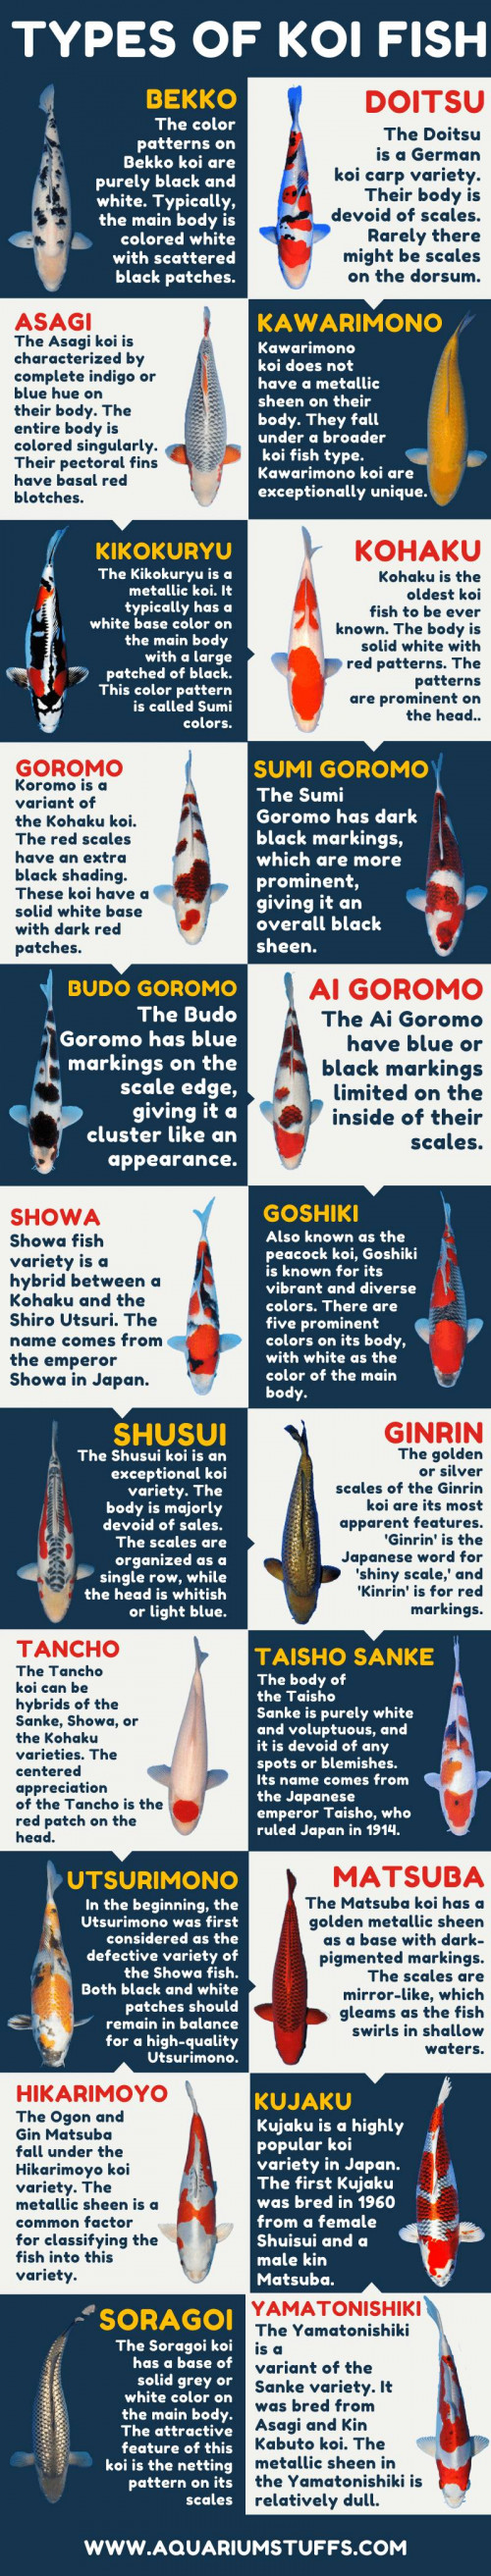 Types-of-Koi-Fish.jpg